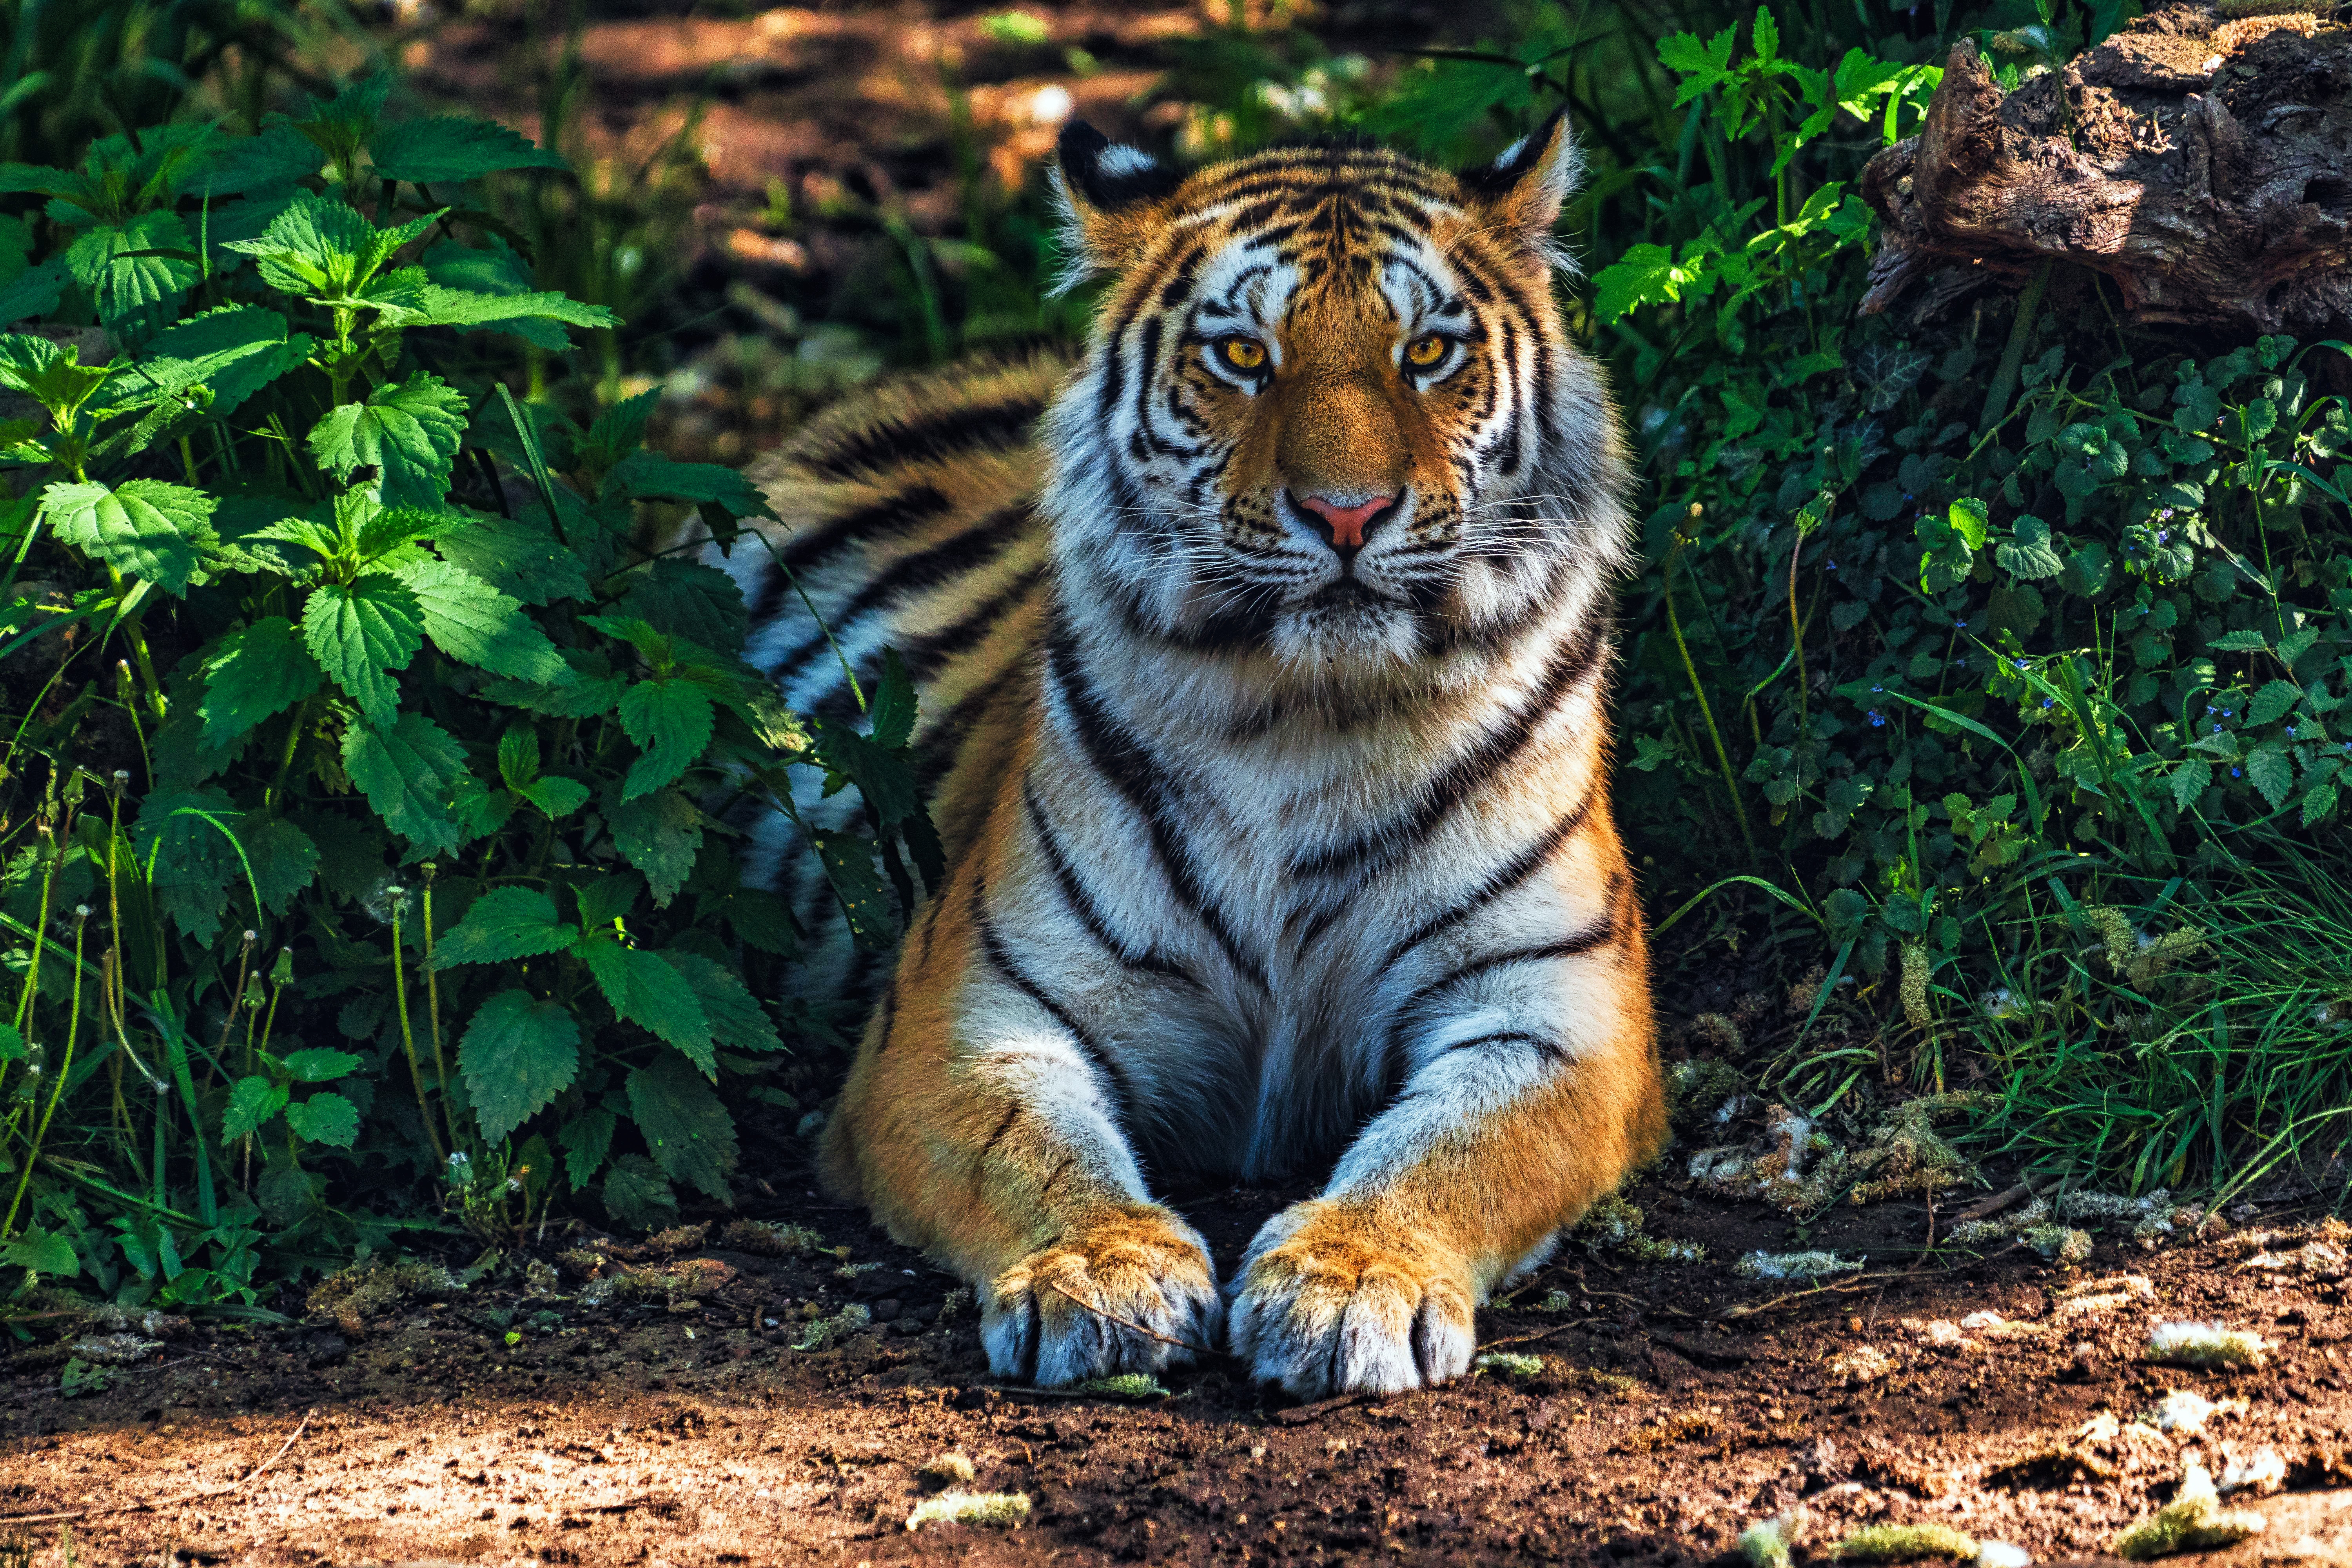 HD wallpaper, Forest, 5K, Jungle, Predator, Bengal Tiger, Wild Cat